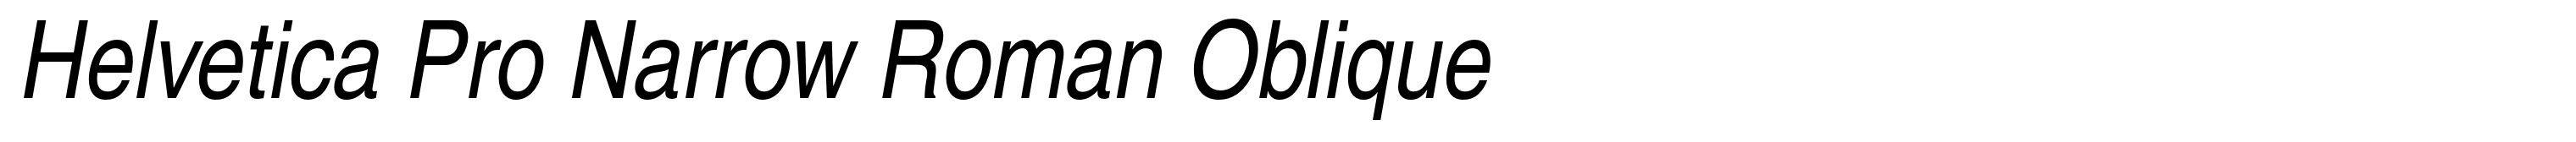 Helvetica Pro Narrow Roman Oblique